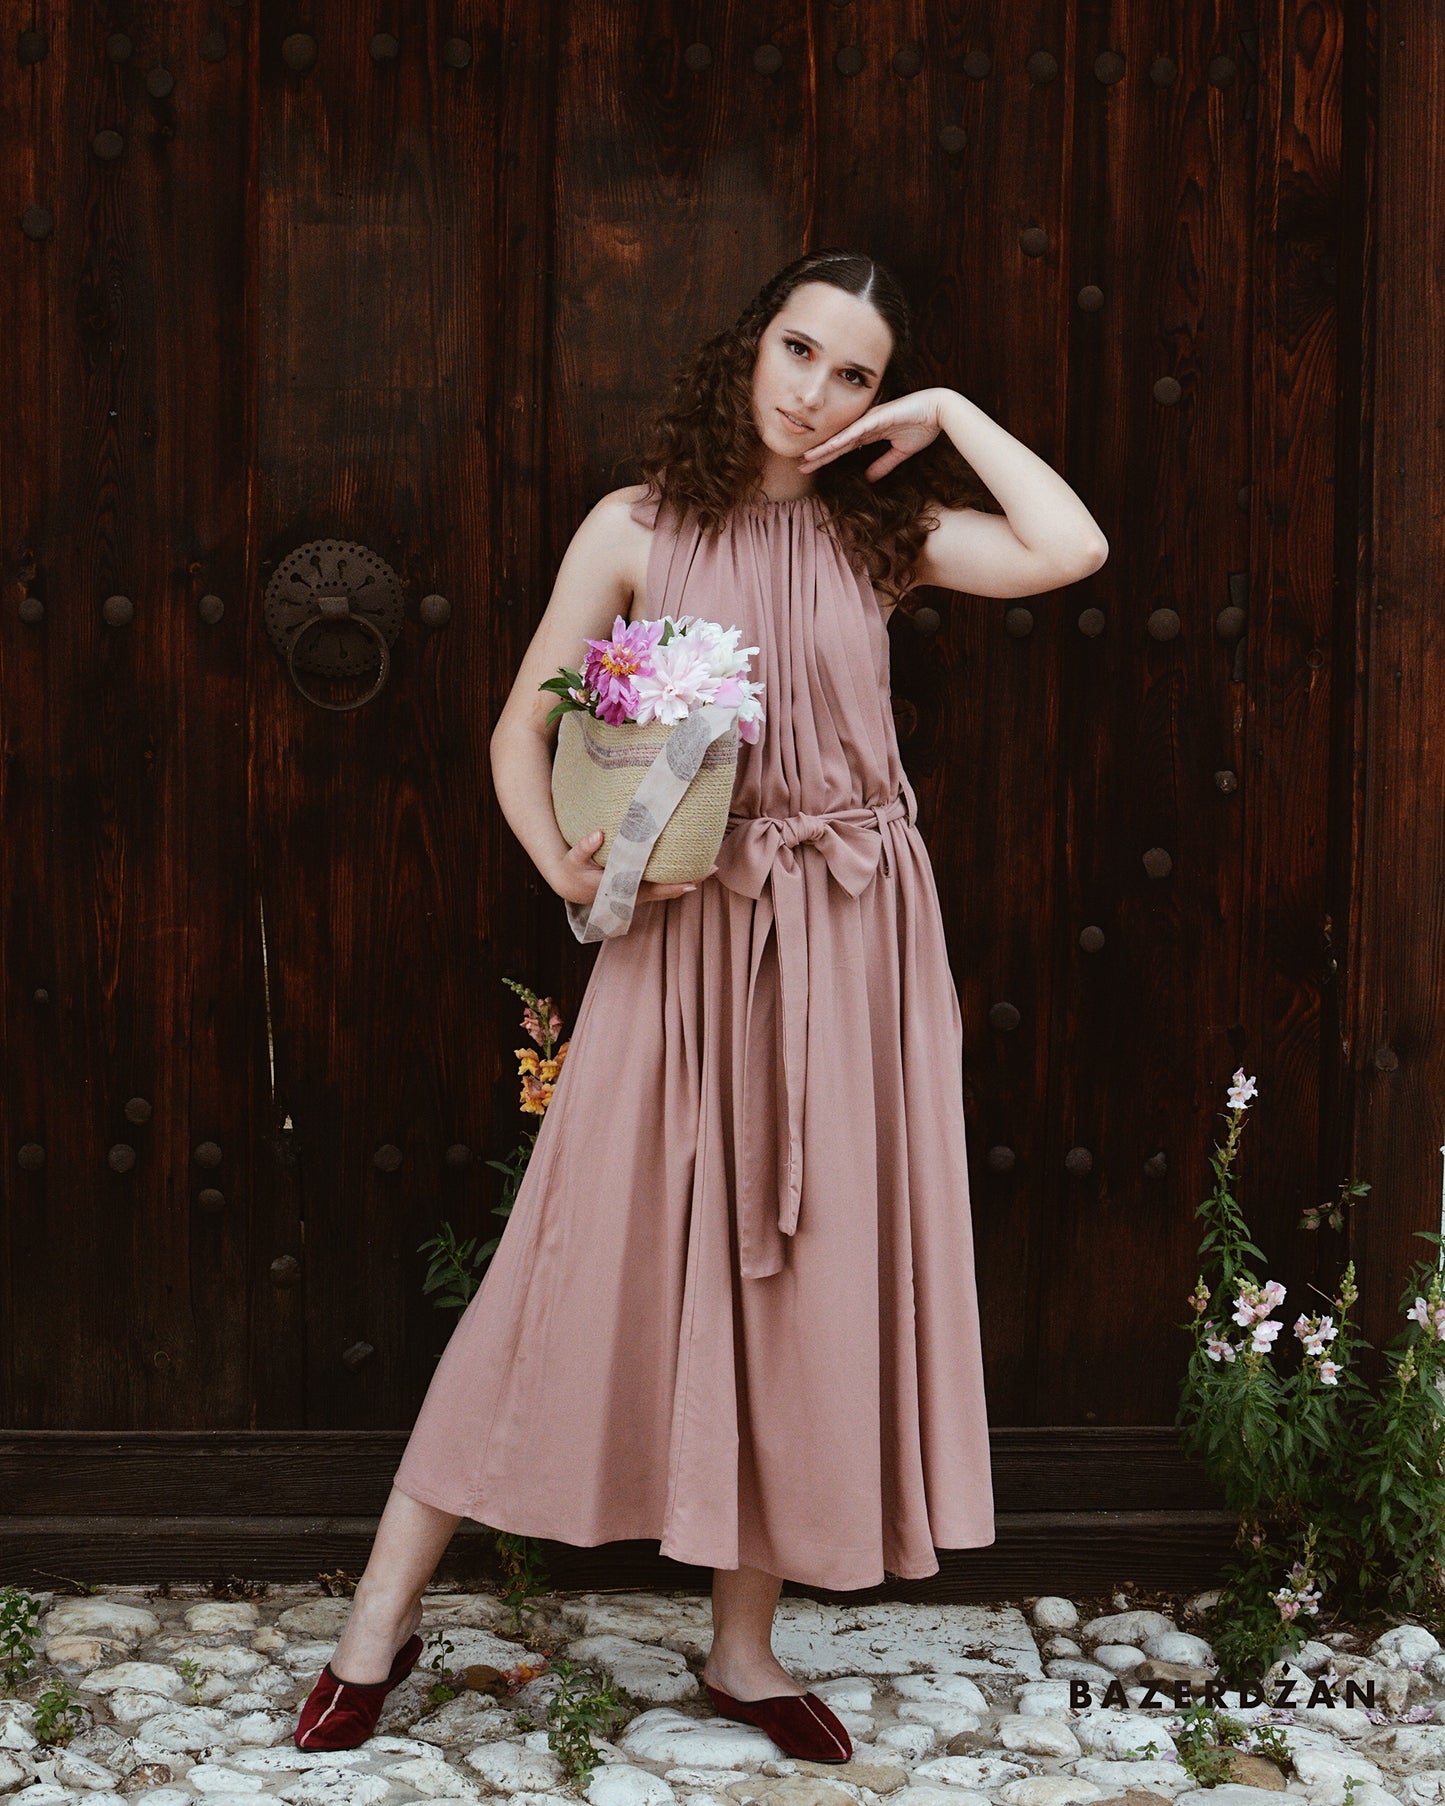 Dress Rose by Bazerdzan Wear